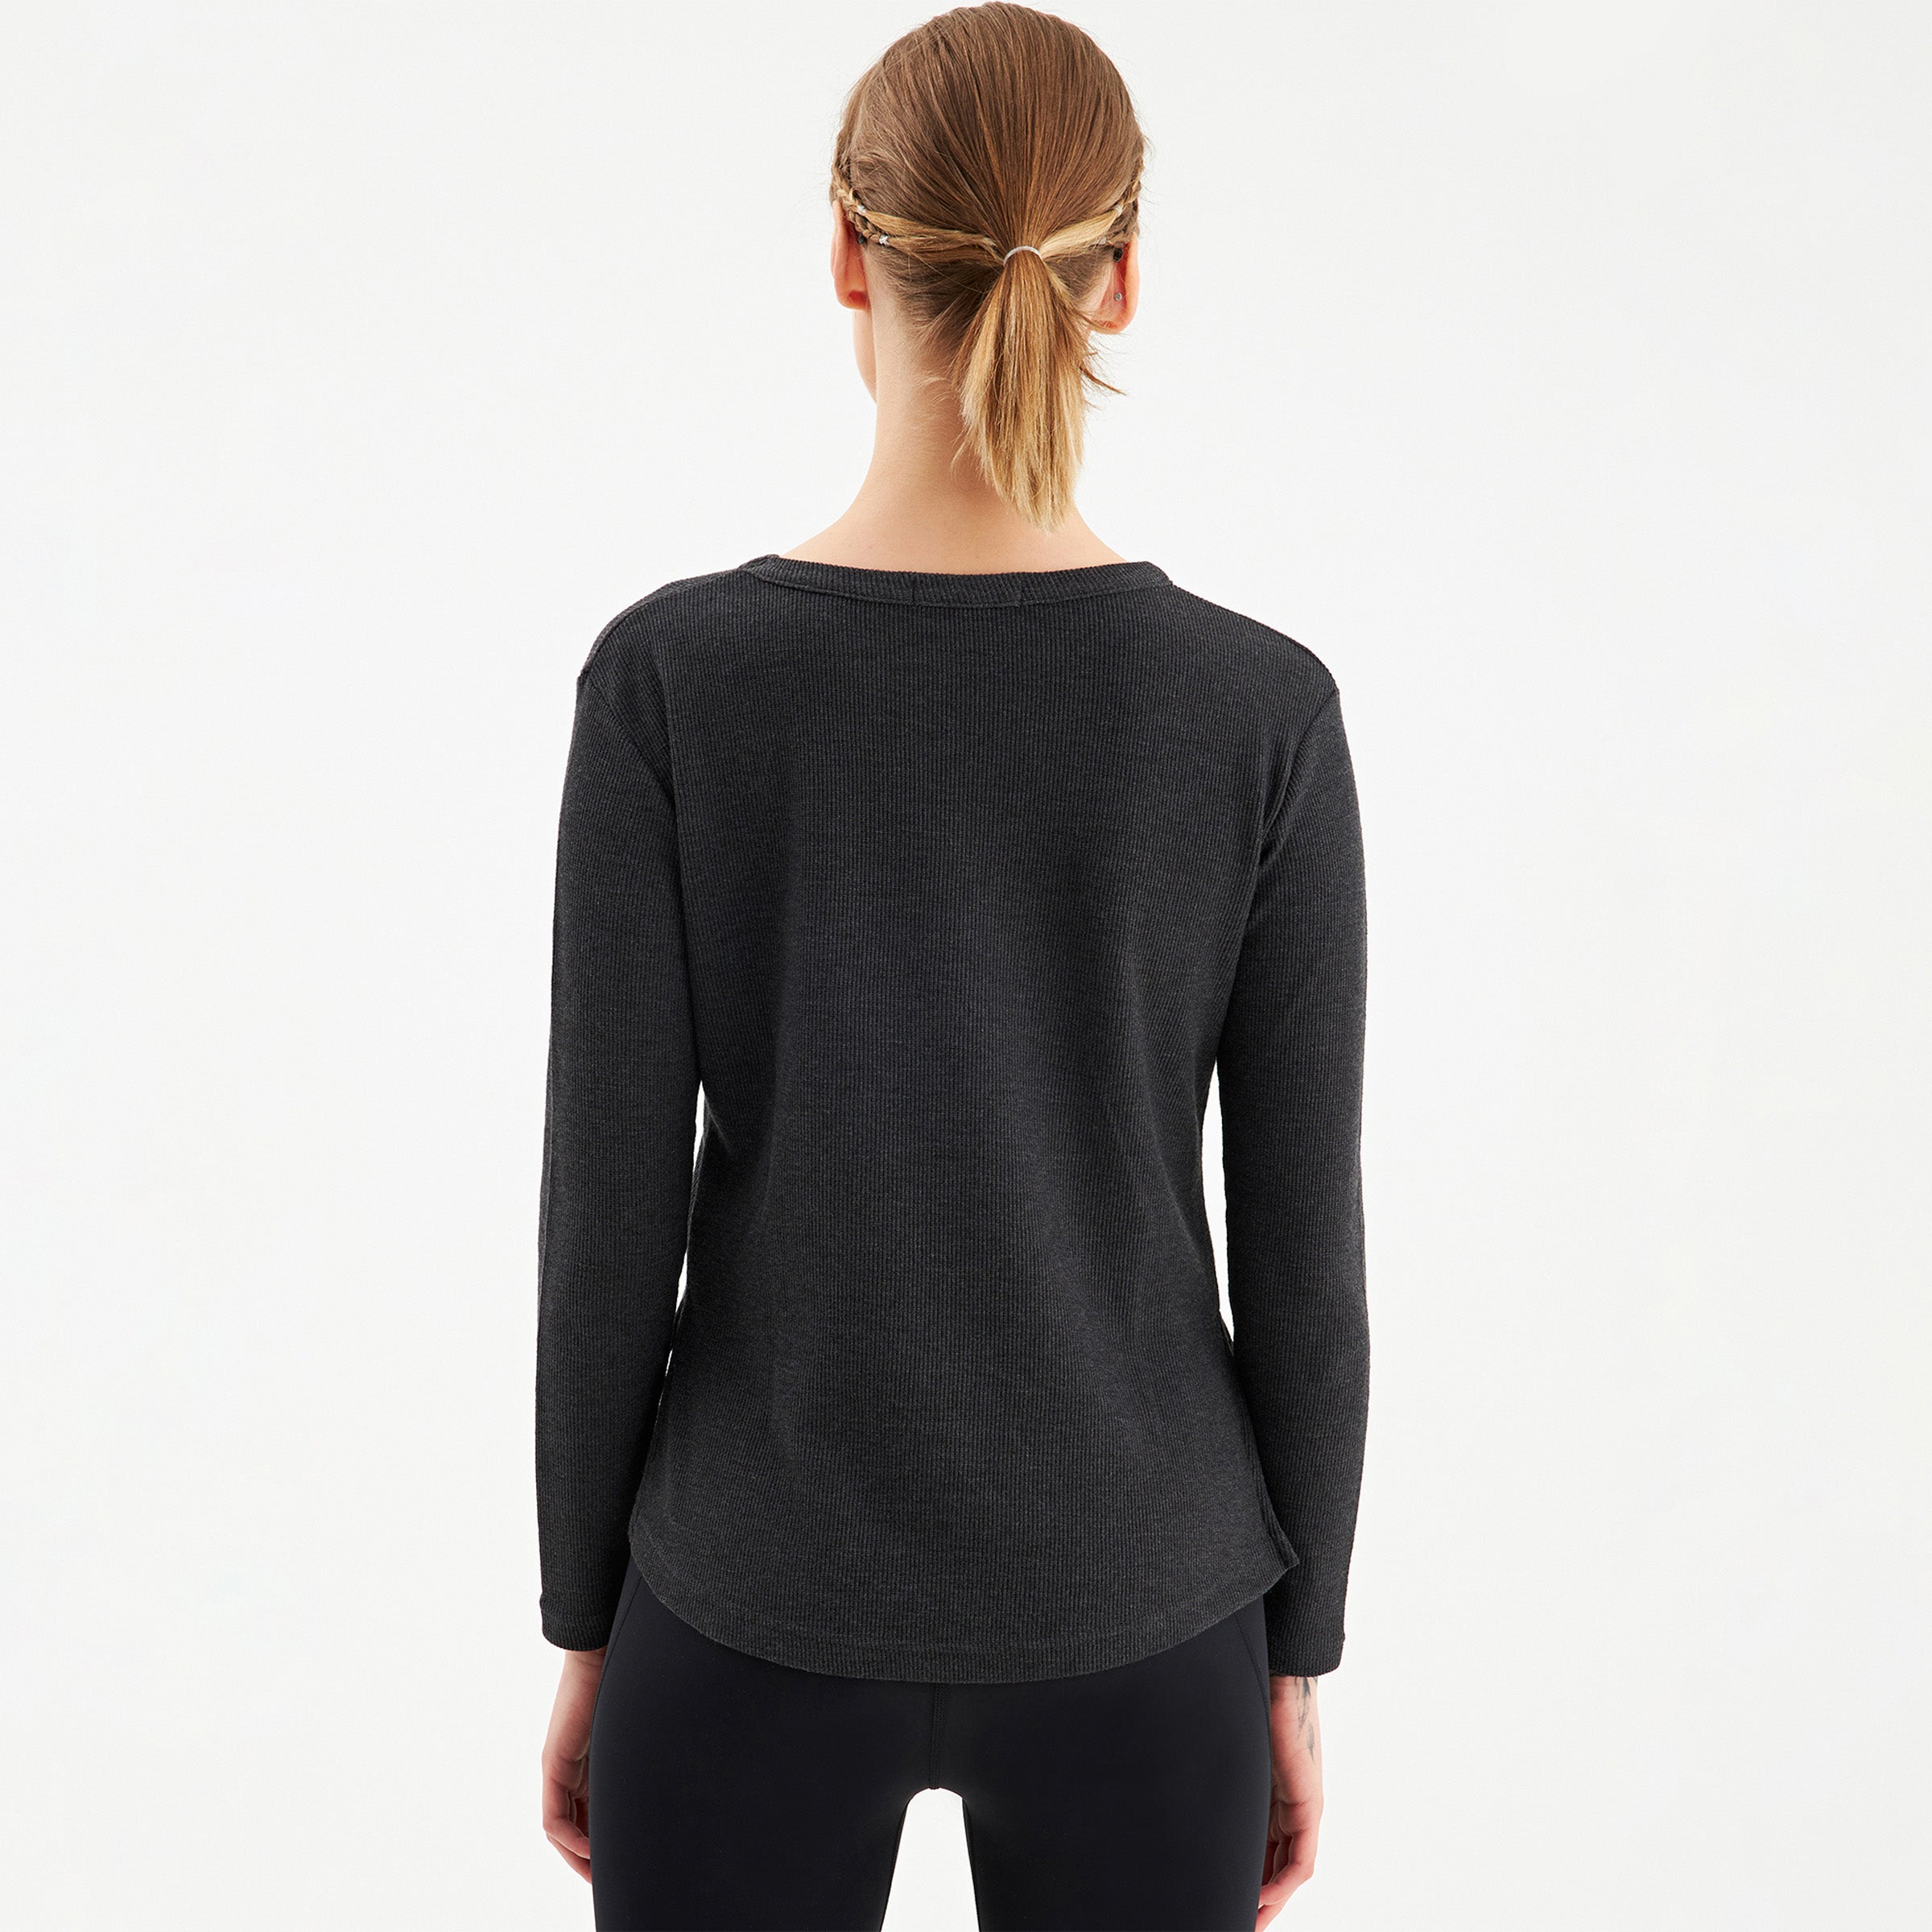 GA Allure Sweatshirt (Charcoal)